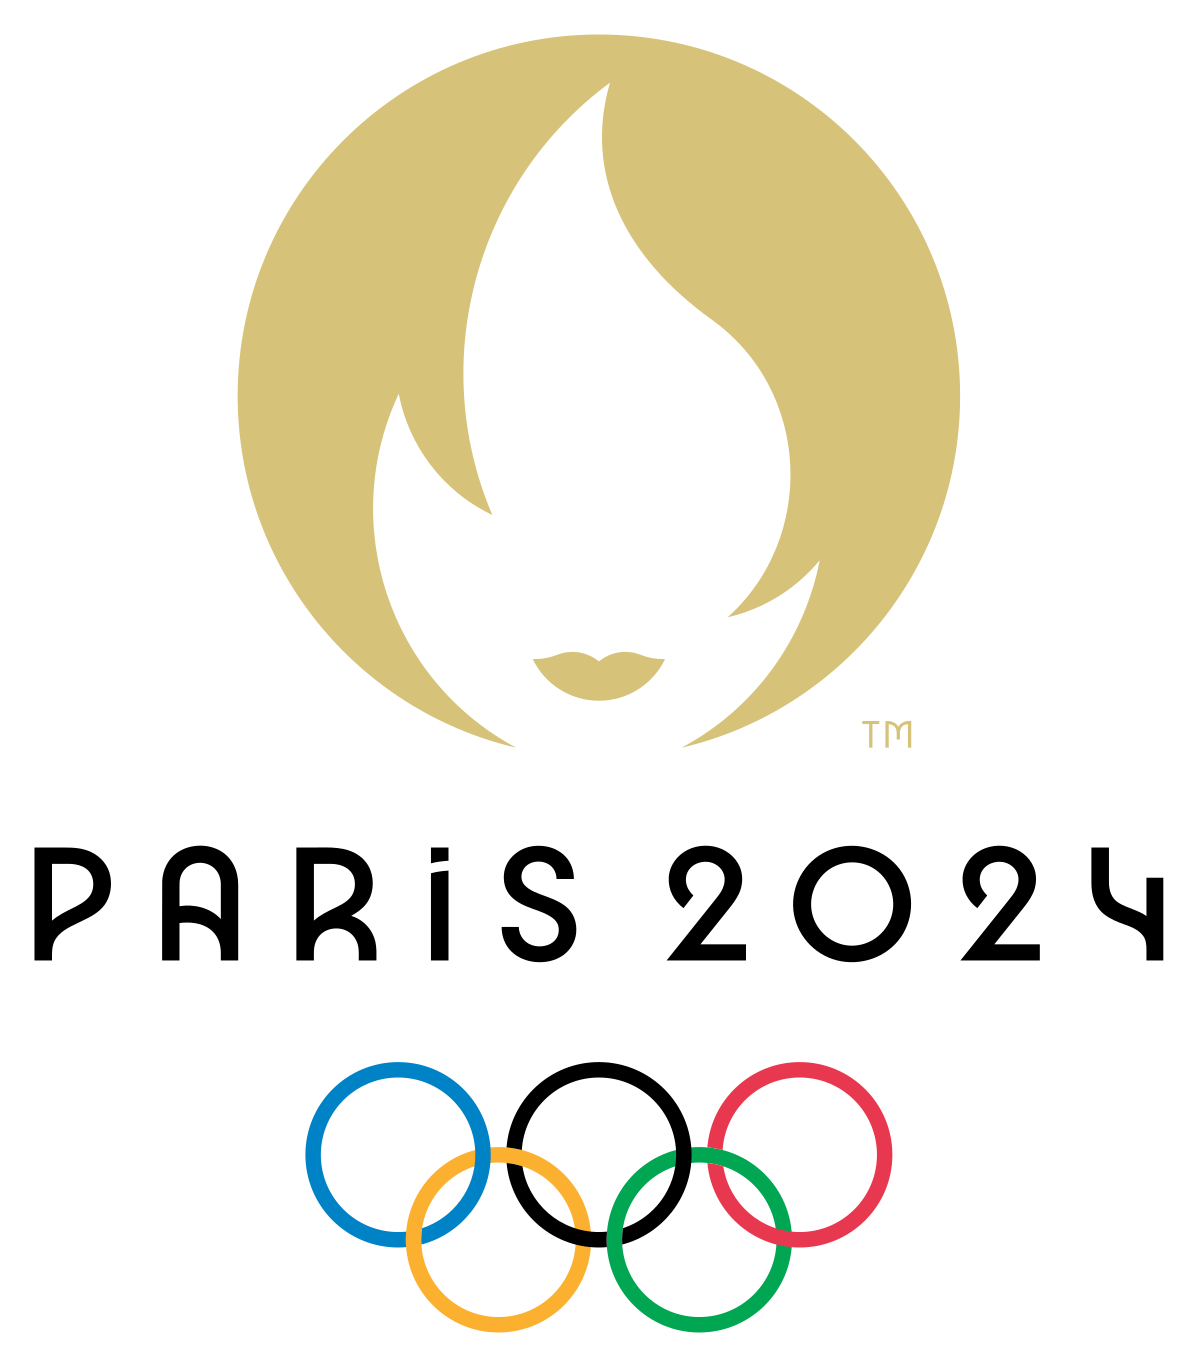 Longing 2024 Olympics Valli Isabelle